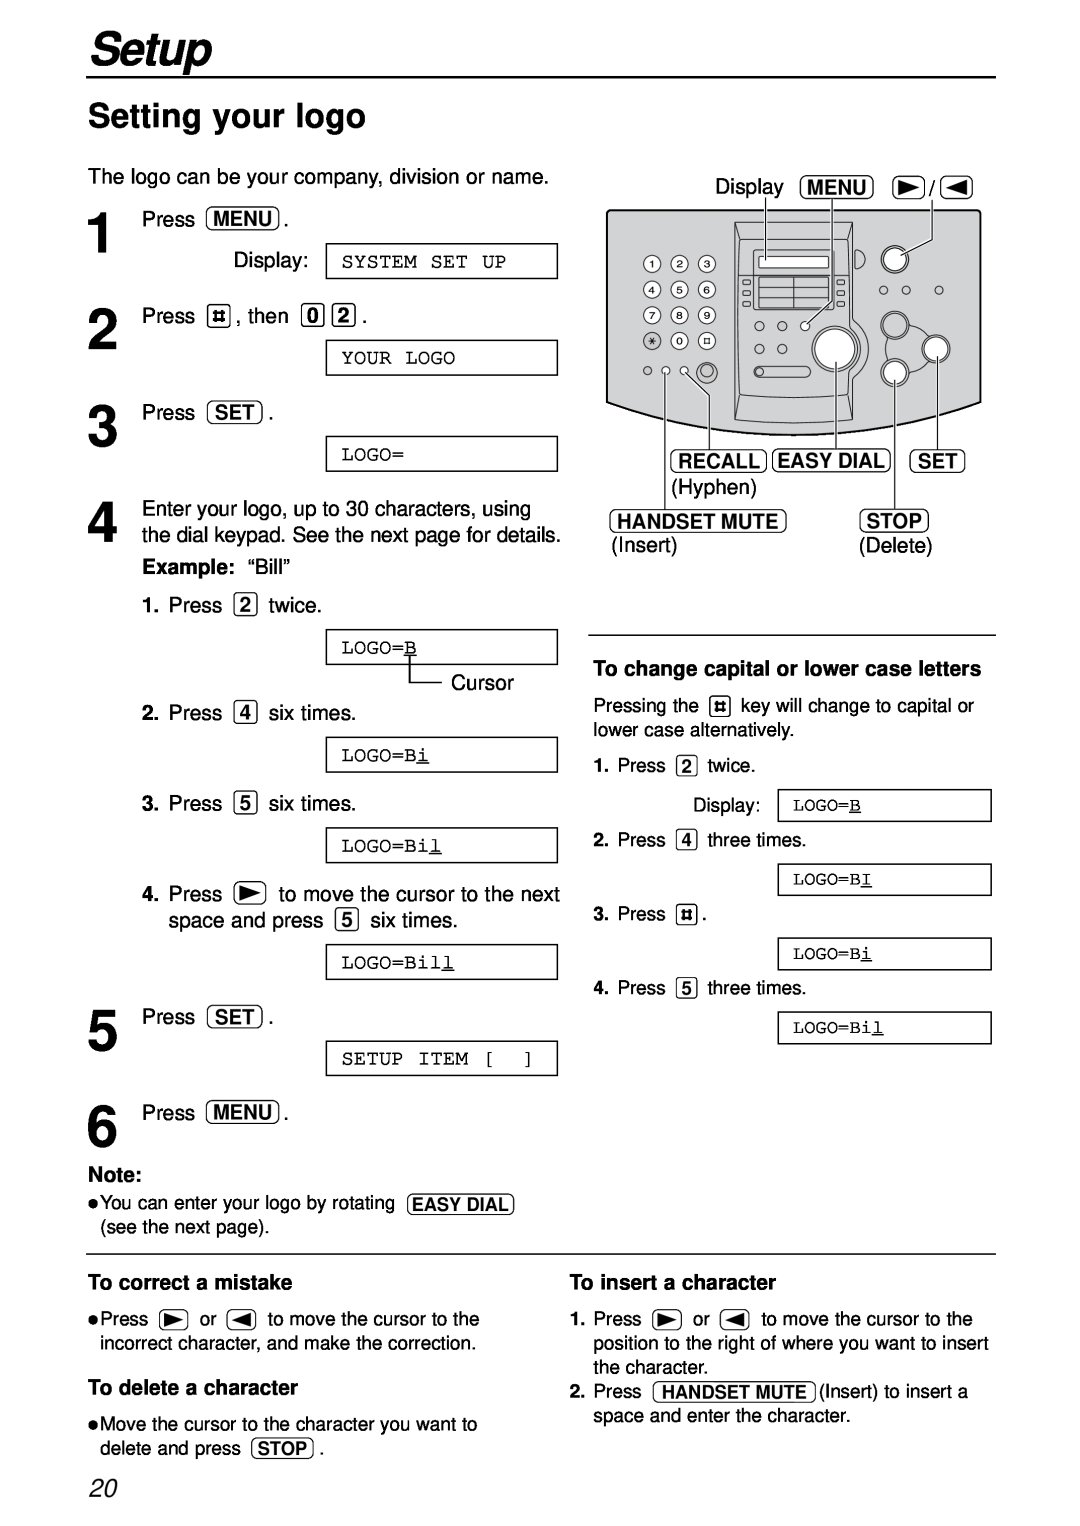 Panasonic KX-FL501AL, KX-FL501NZ manual Setting your logo, Setup, Menu, Recall Easy Dial Set, Handset Mute, Example “Bill” 